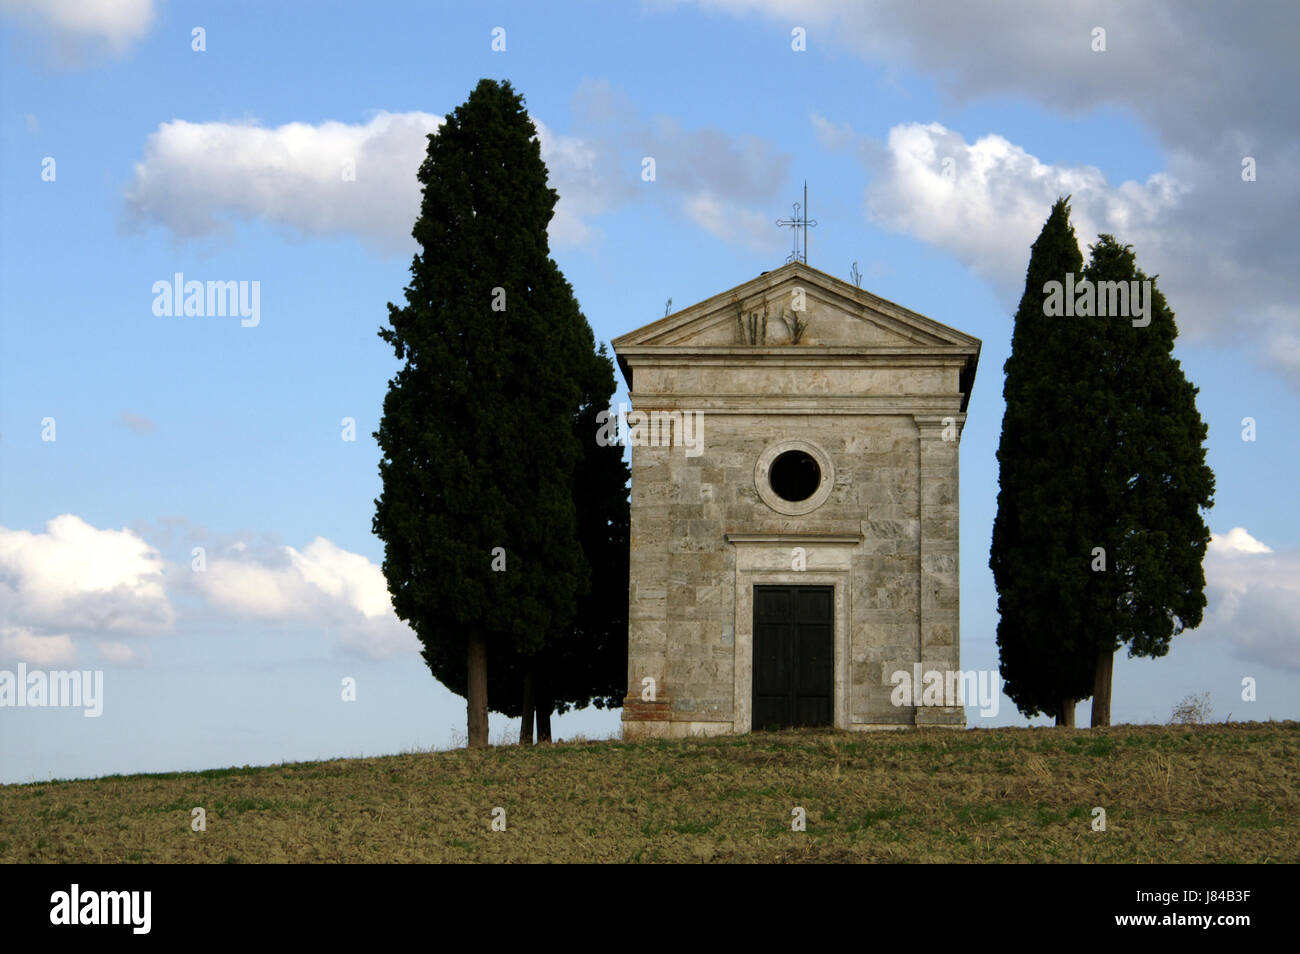 Kirche, Kapelle Toskana Landschaft Landschaft Landschaft Natur ländlichen Bauern blau Stockfoto